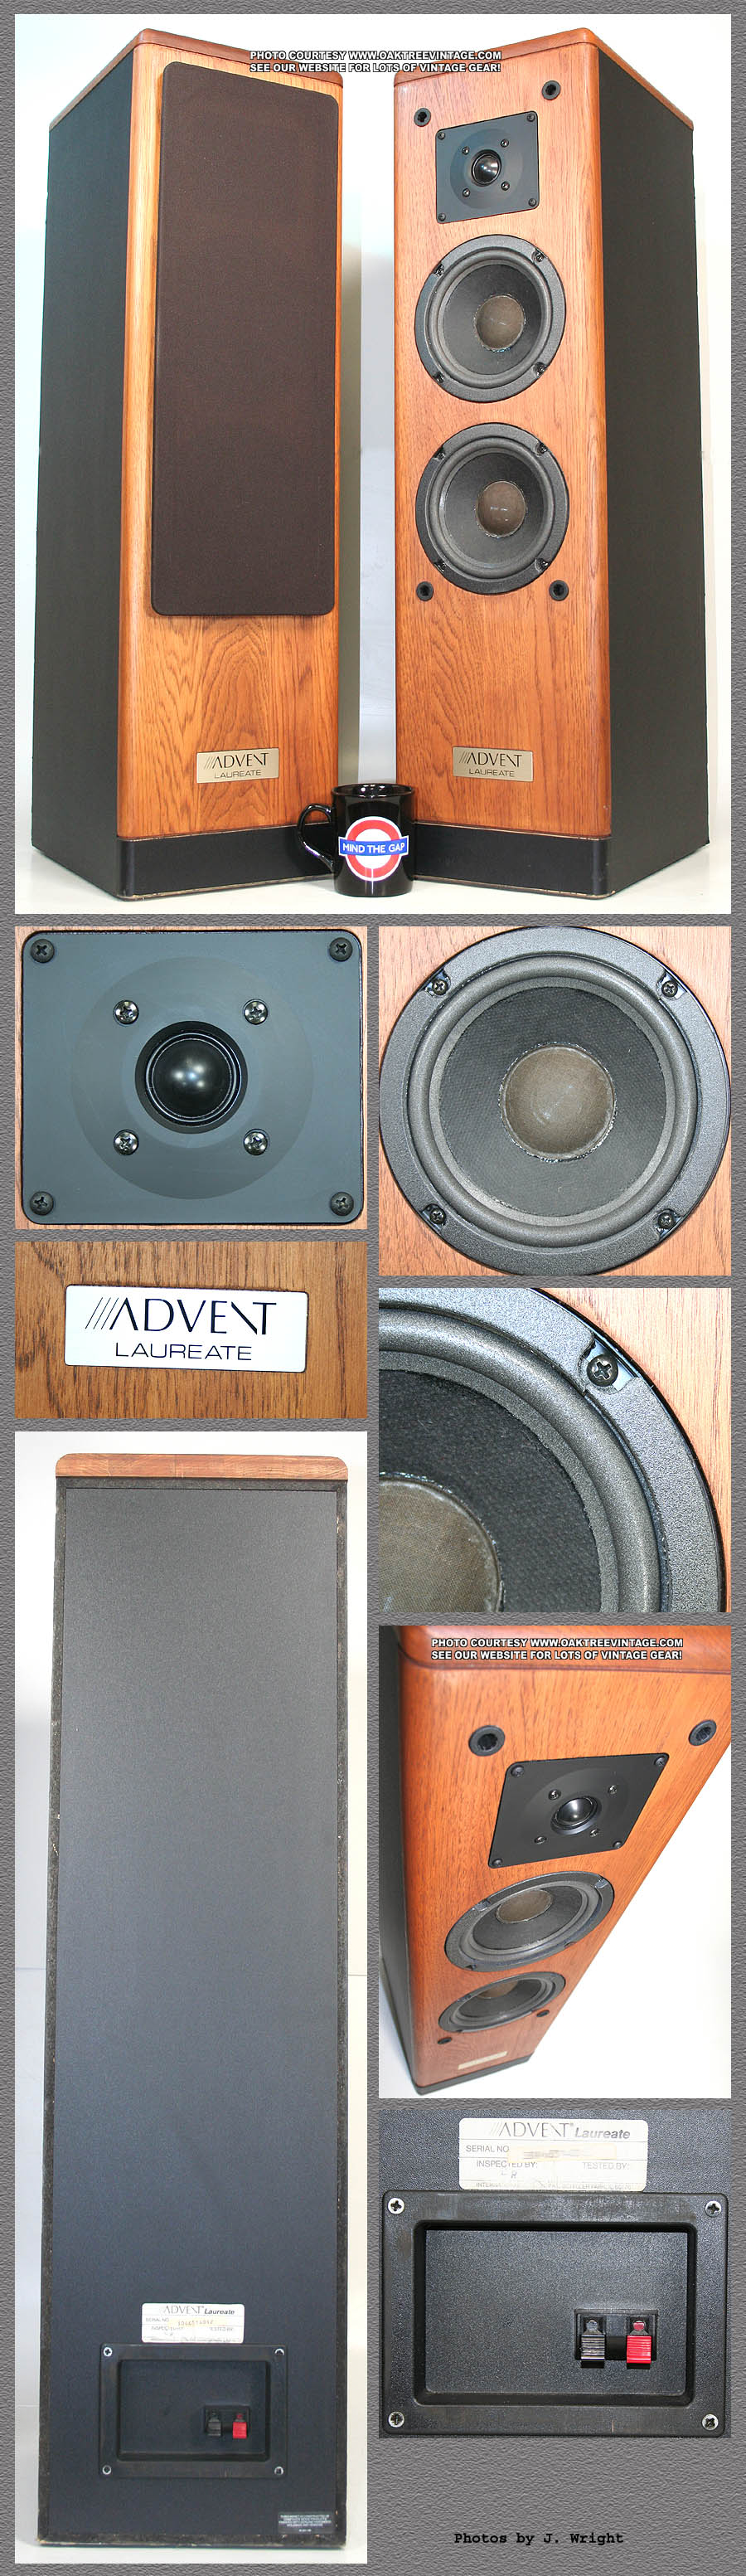 original large advent speaker wiring